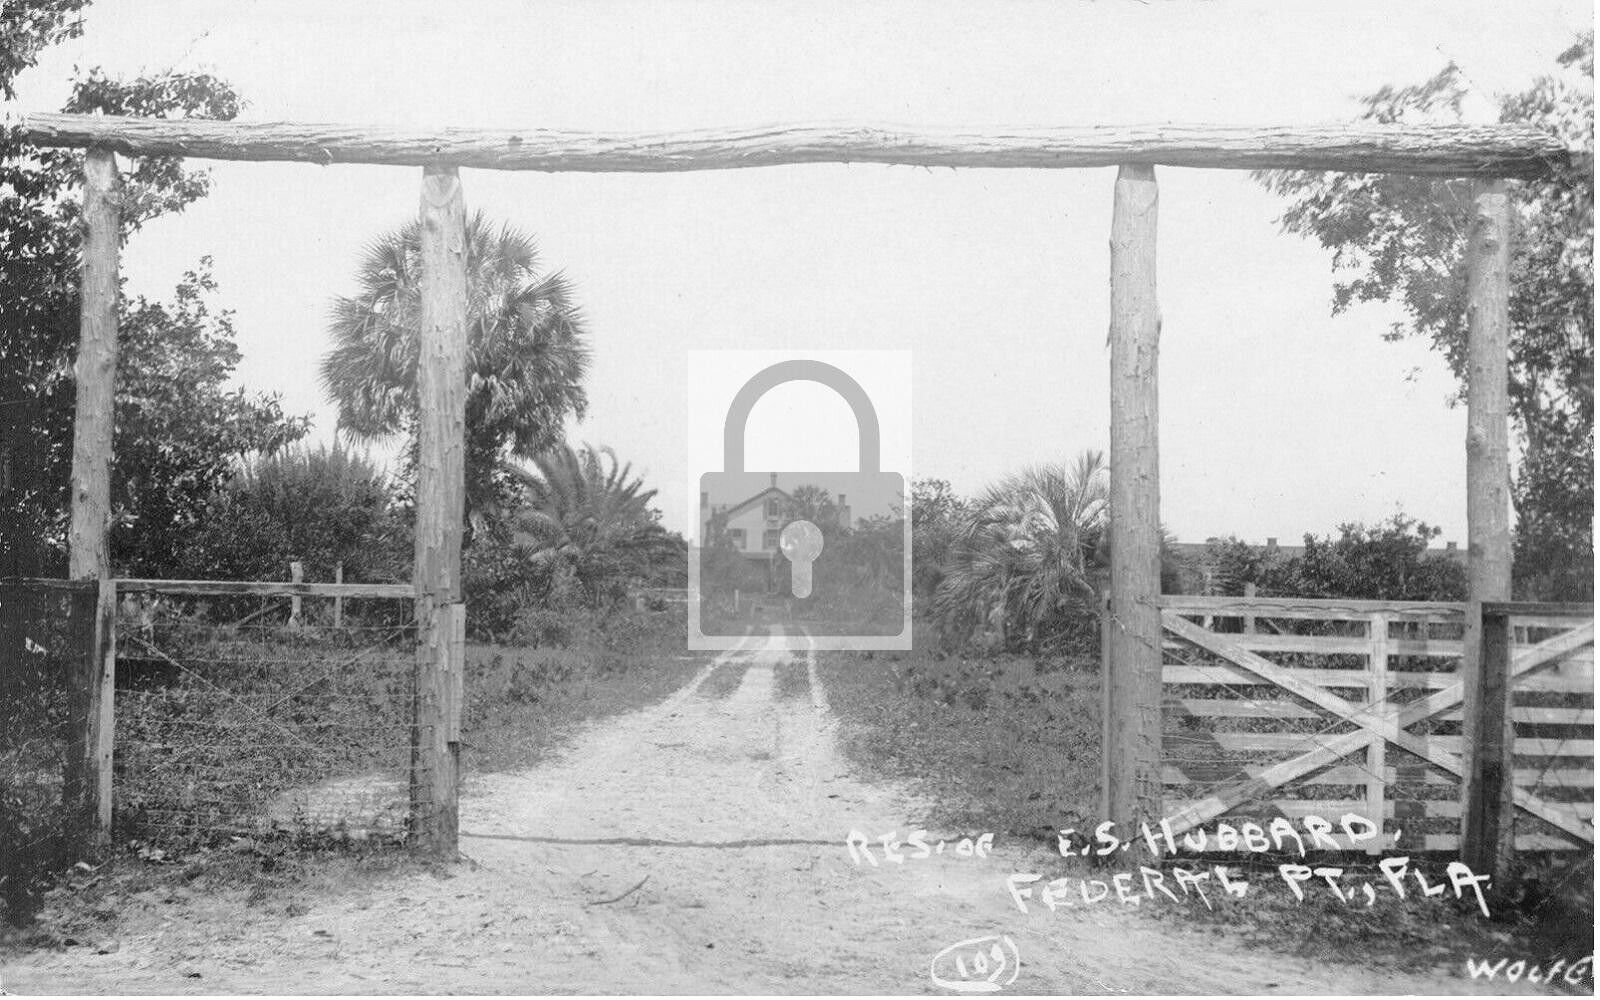 E S Hubbard Residence Federal Point Florida FL Reprint Postcard